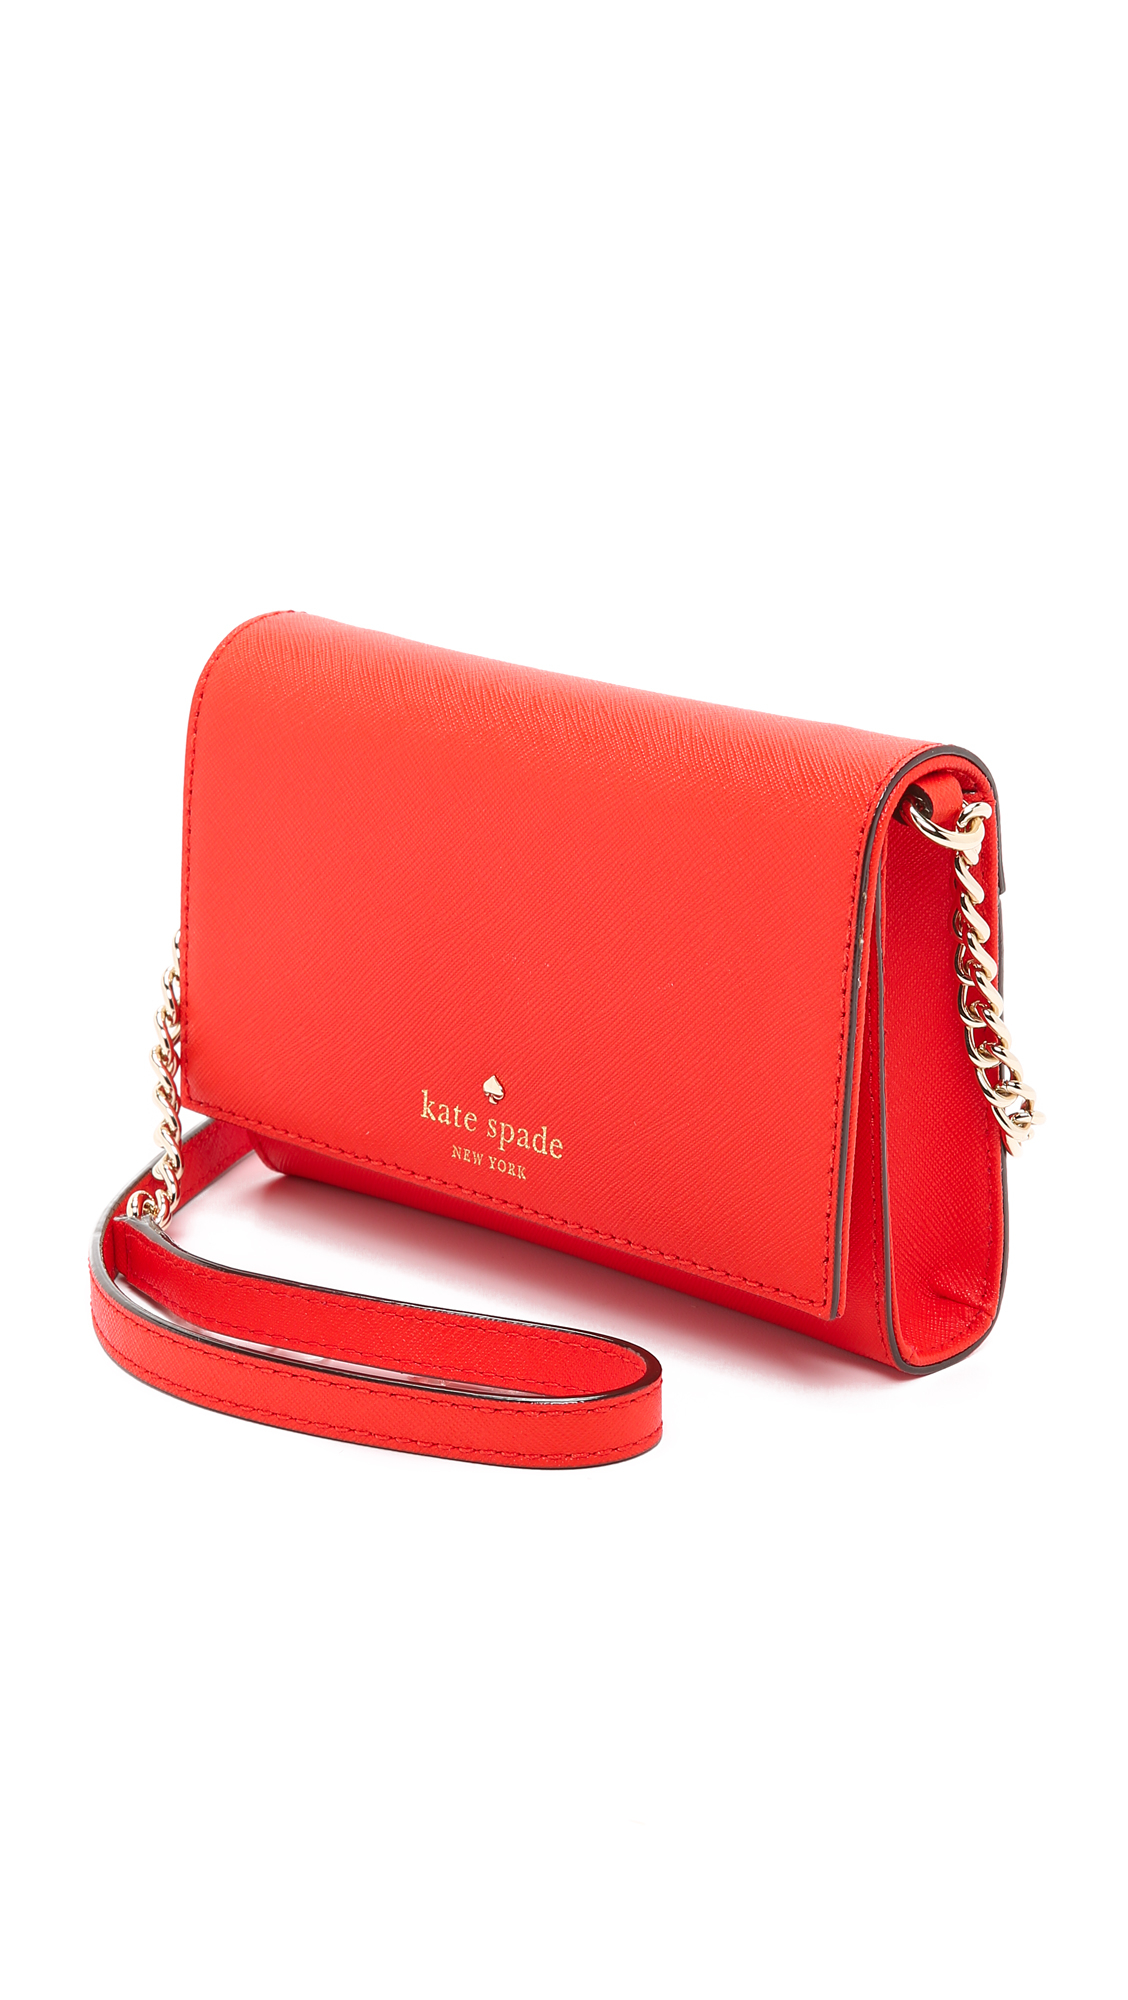 Lyst - Kate Spade New York Cami Cross Body Bag in Red